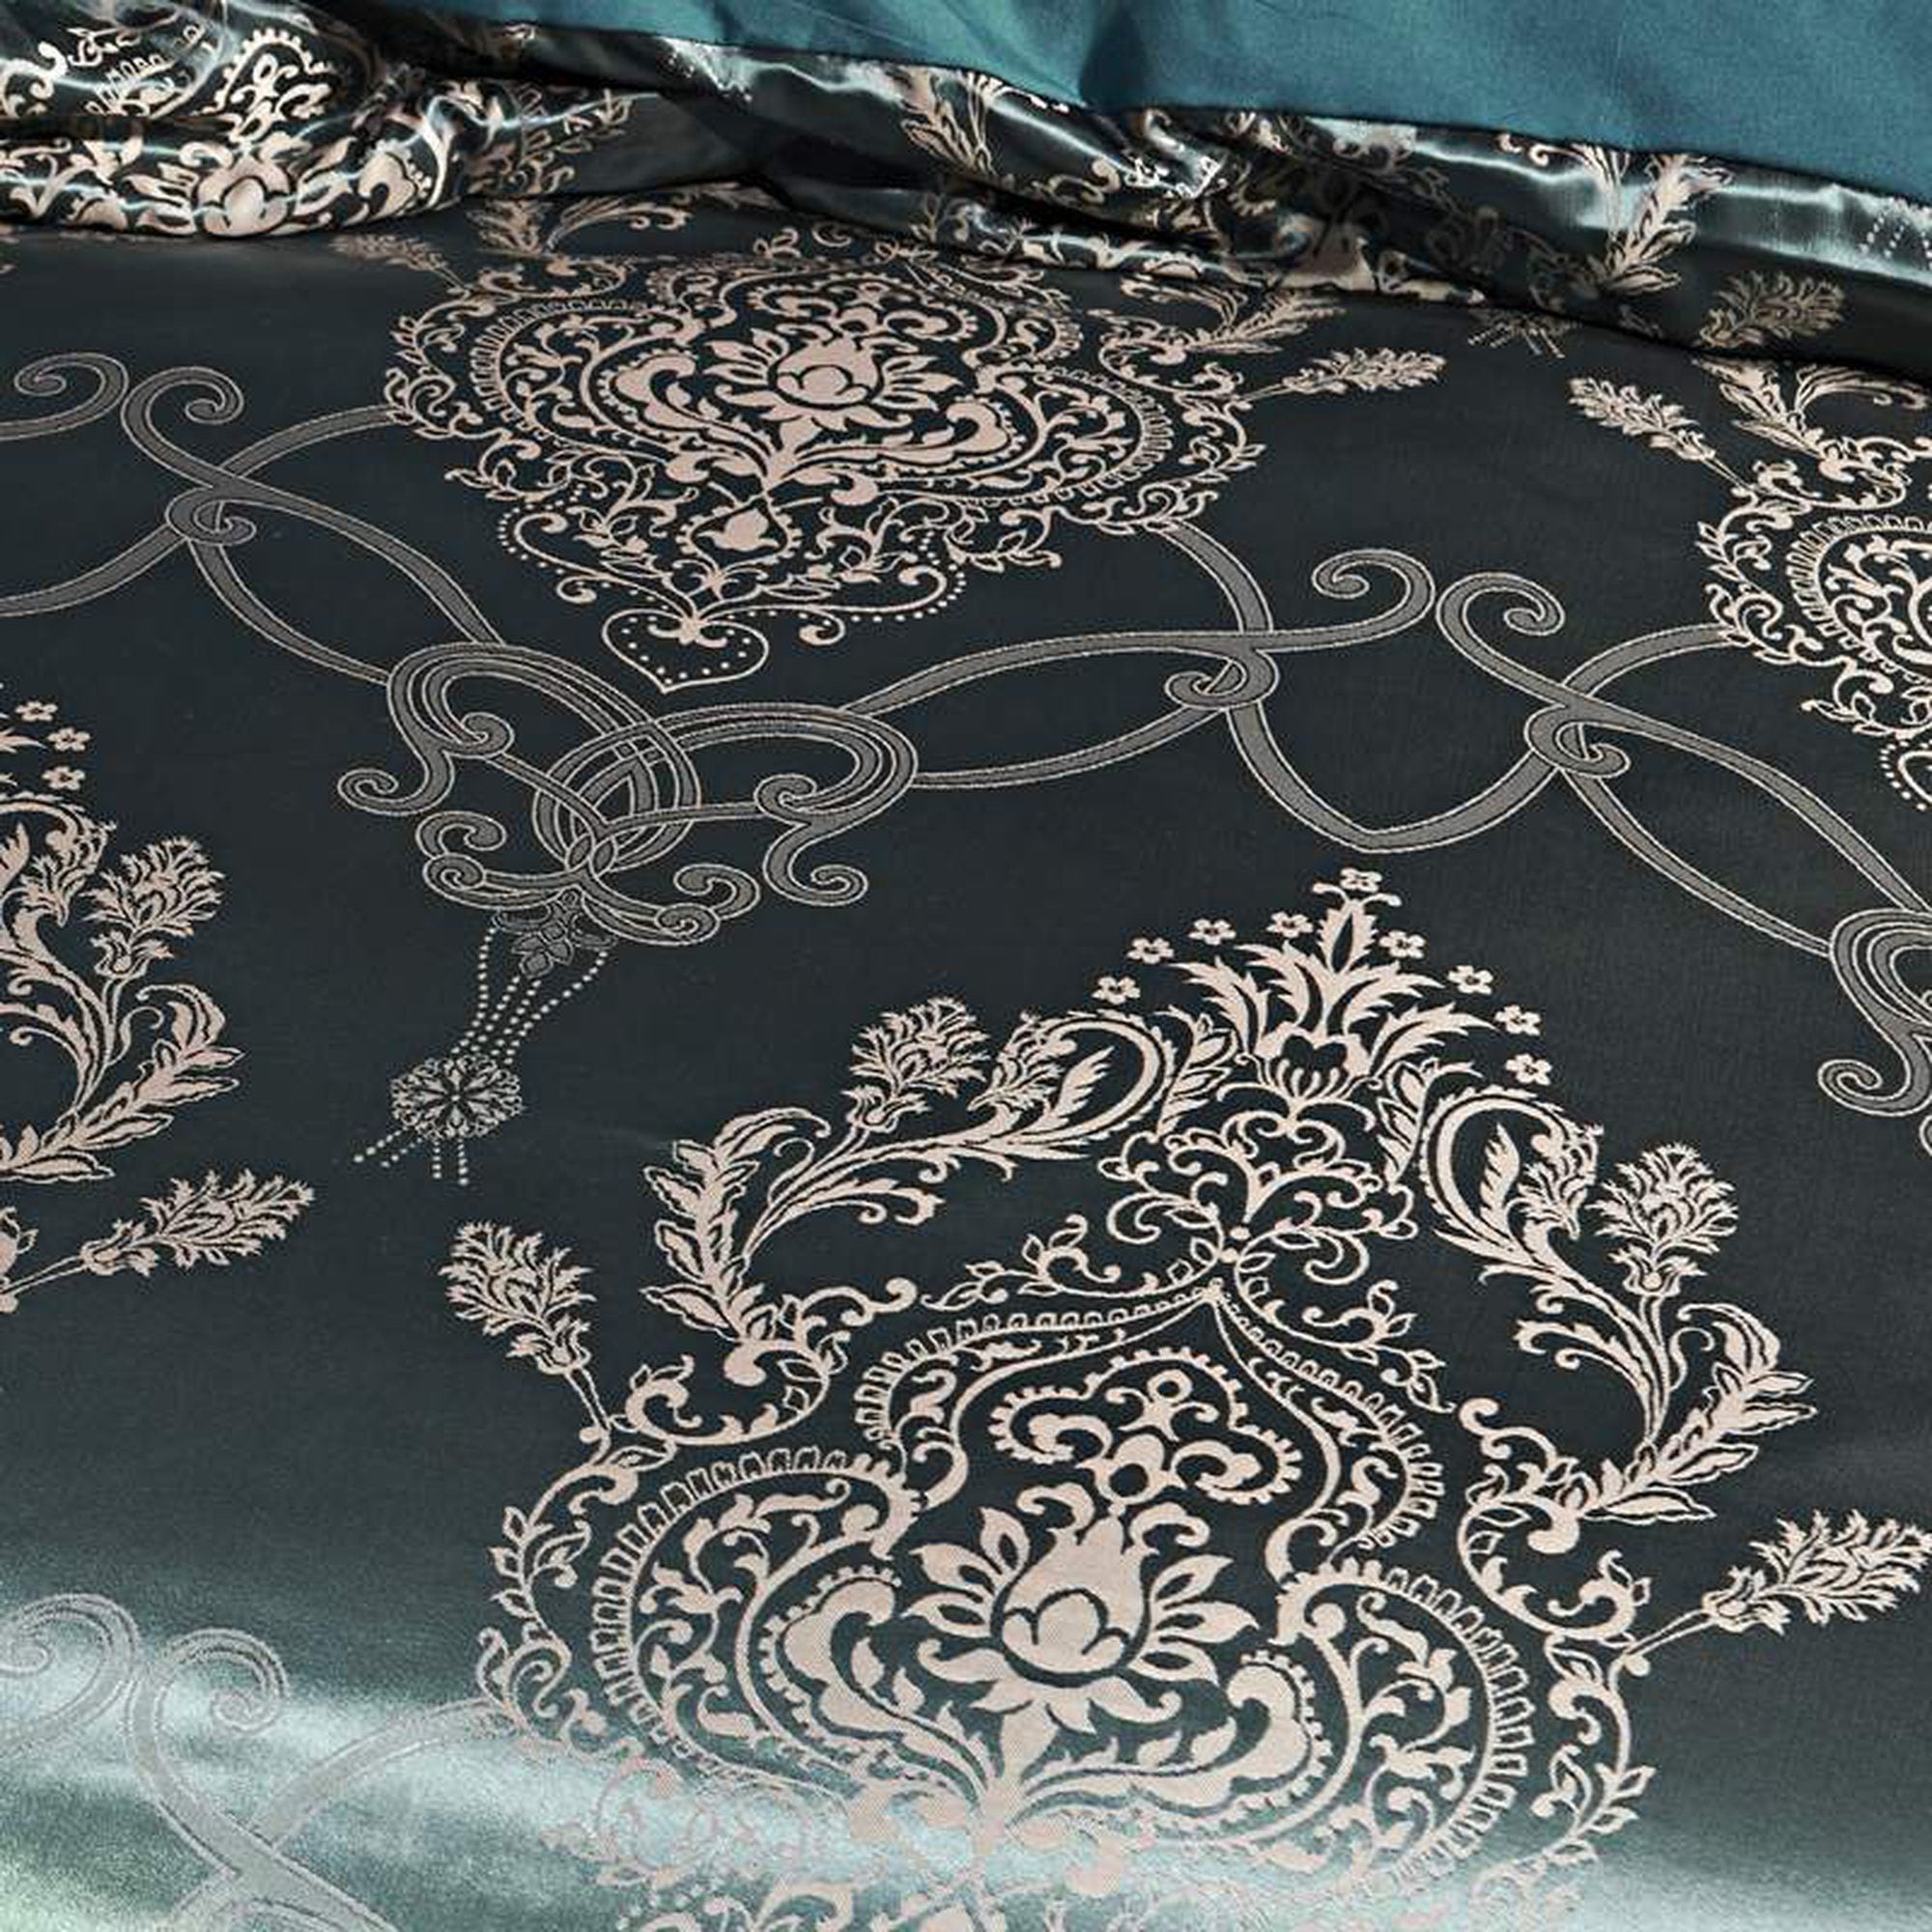 daintyduvet Luxury Green Duvet Cover Set, Jacquard Fabric Aesthetic Bedding Decorative, Embroidered Bedding Set